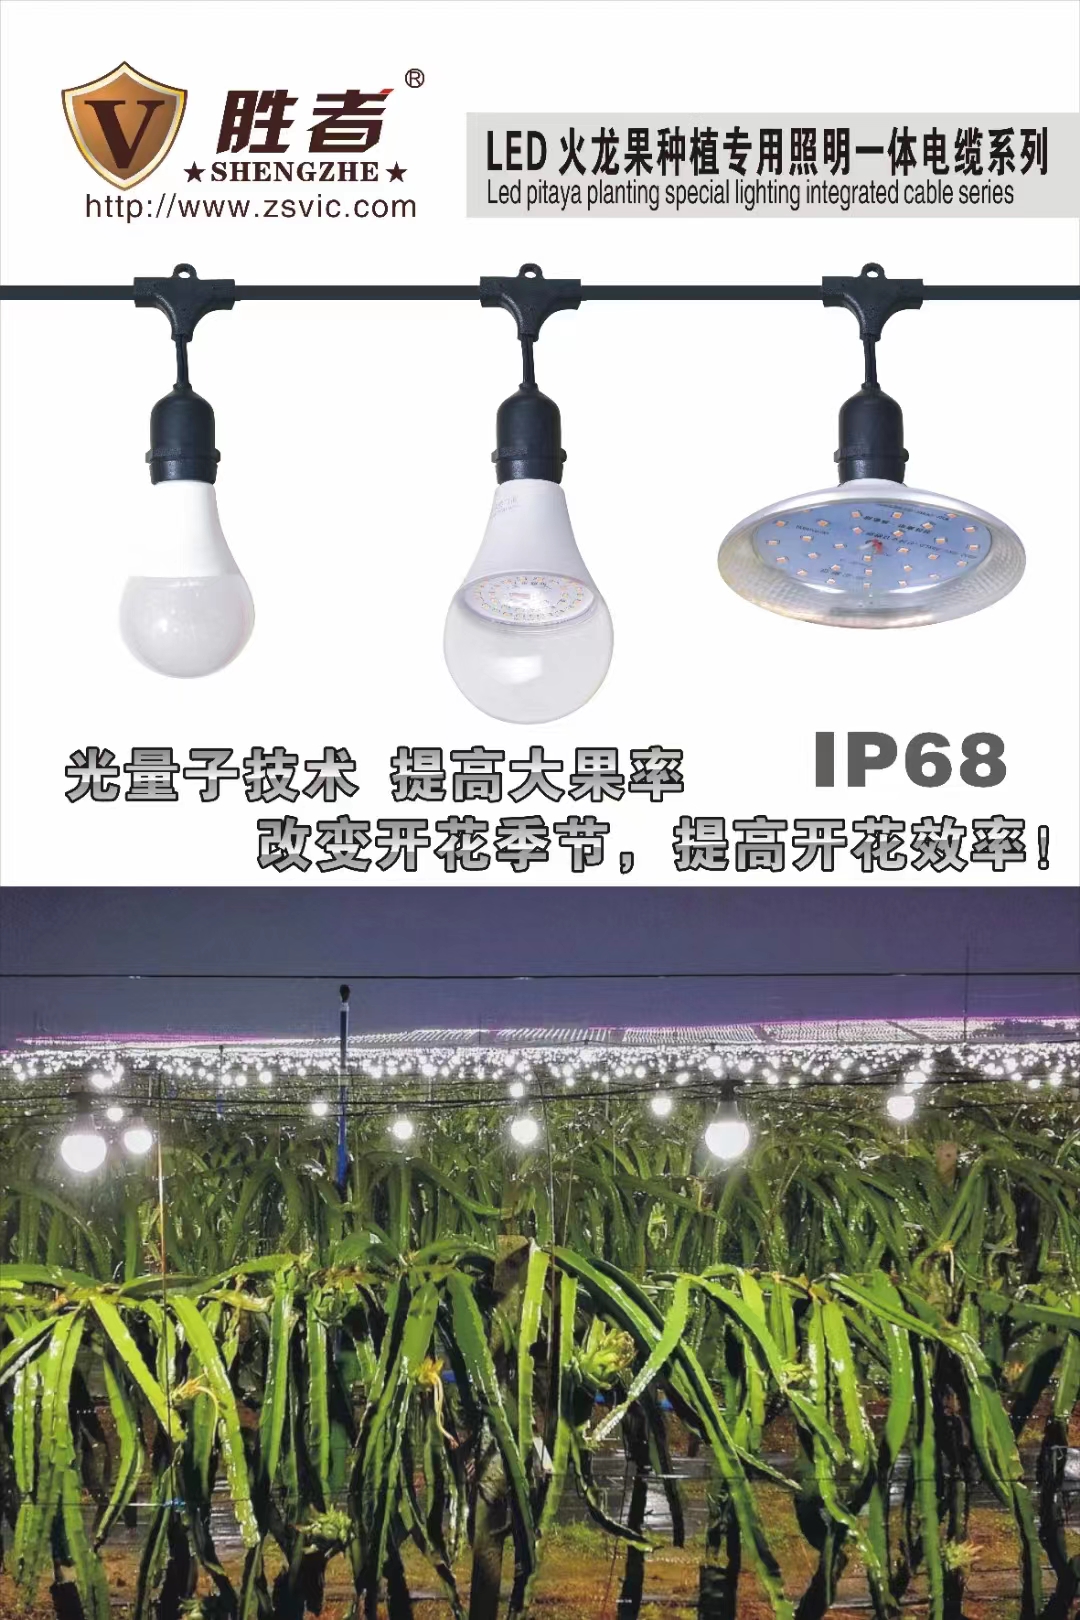 LED plant growh light series SZ-LED-ZW